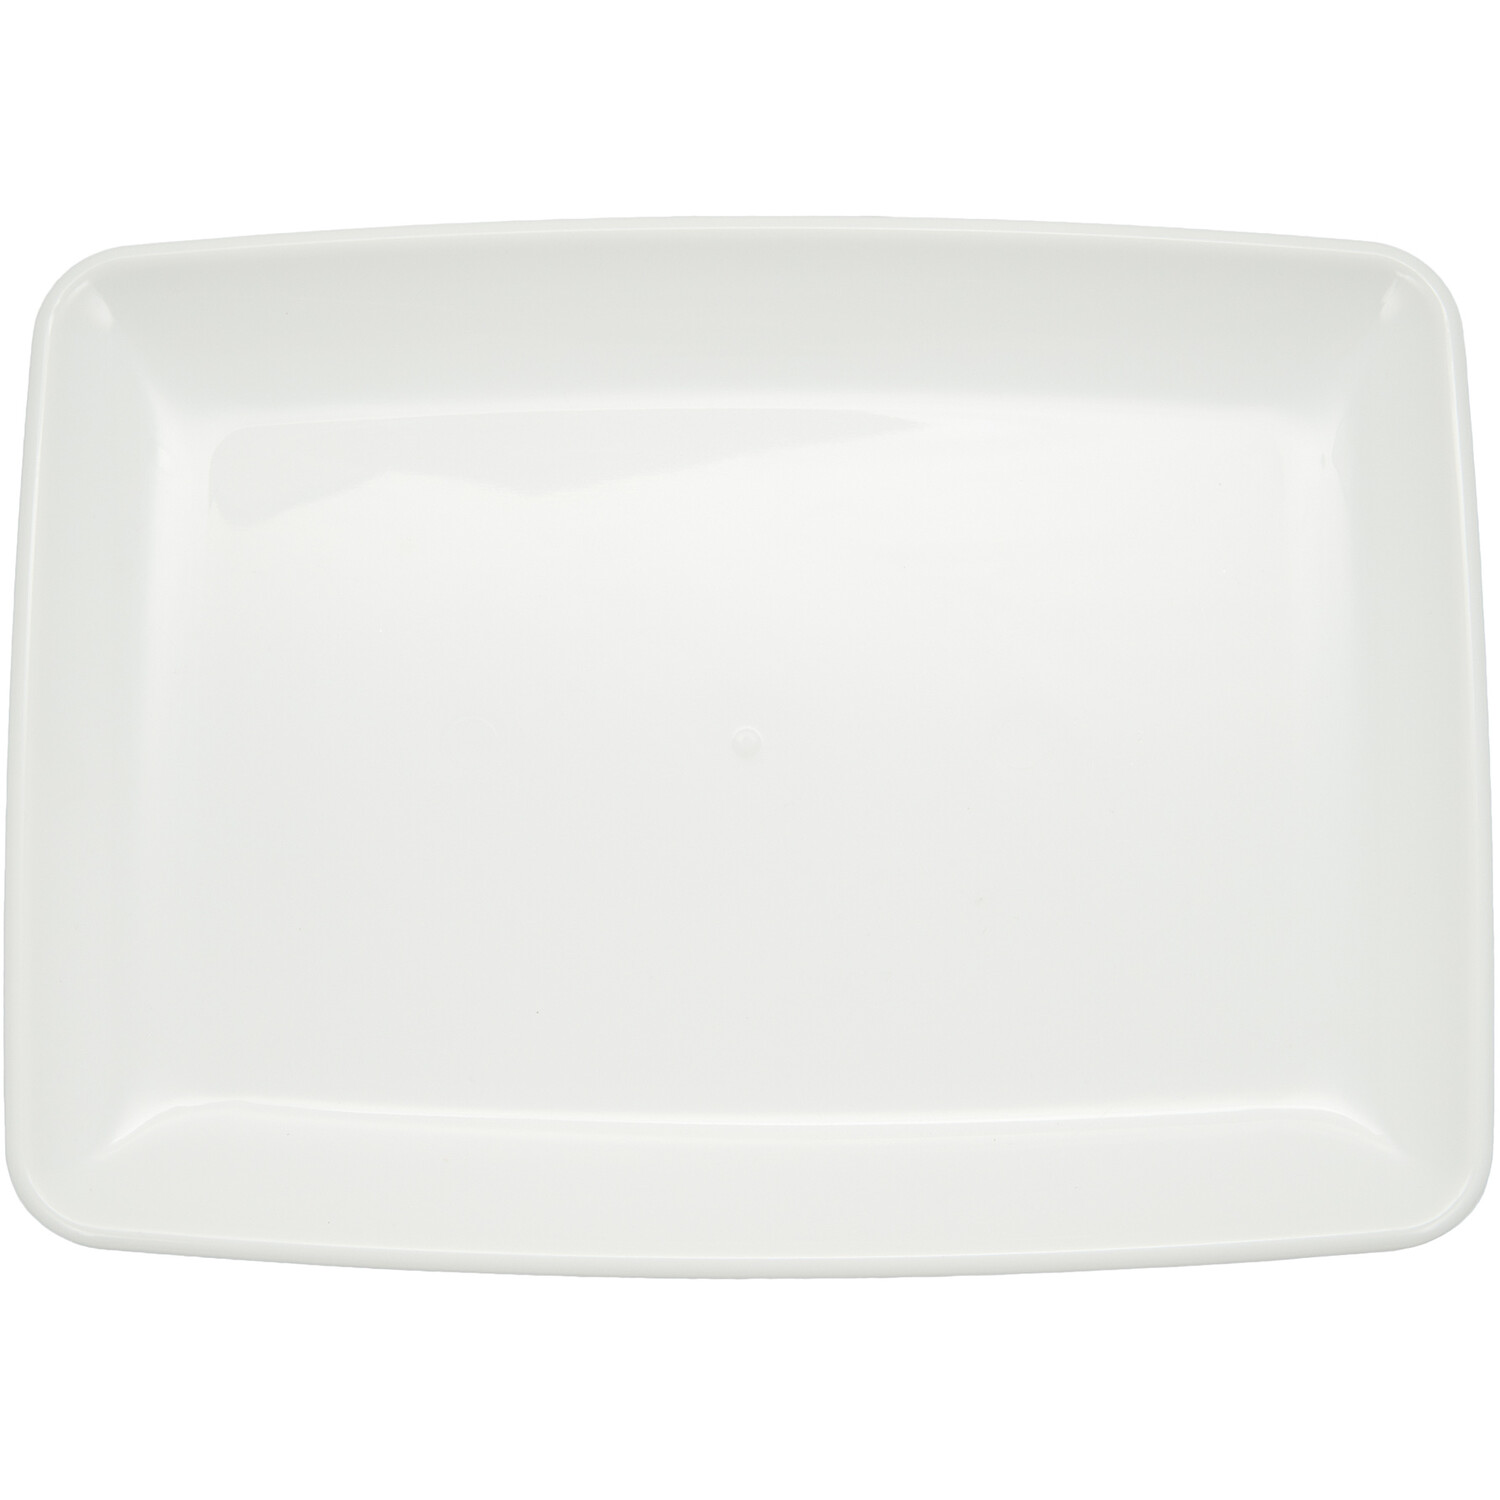 Pack of 3 Rectangular Serving Platters - White Image 2